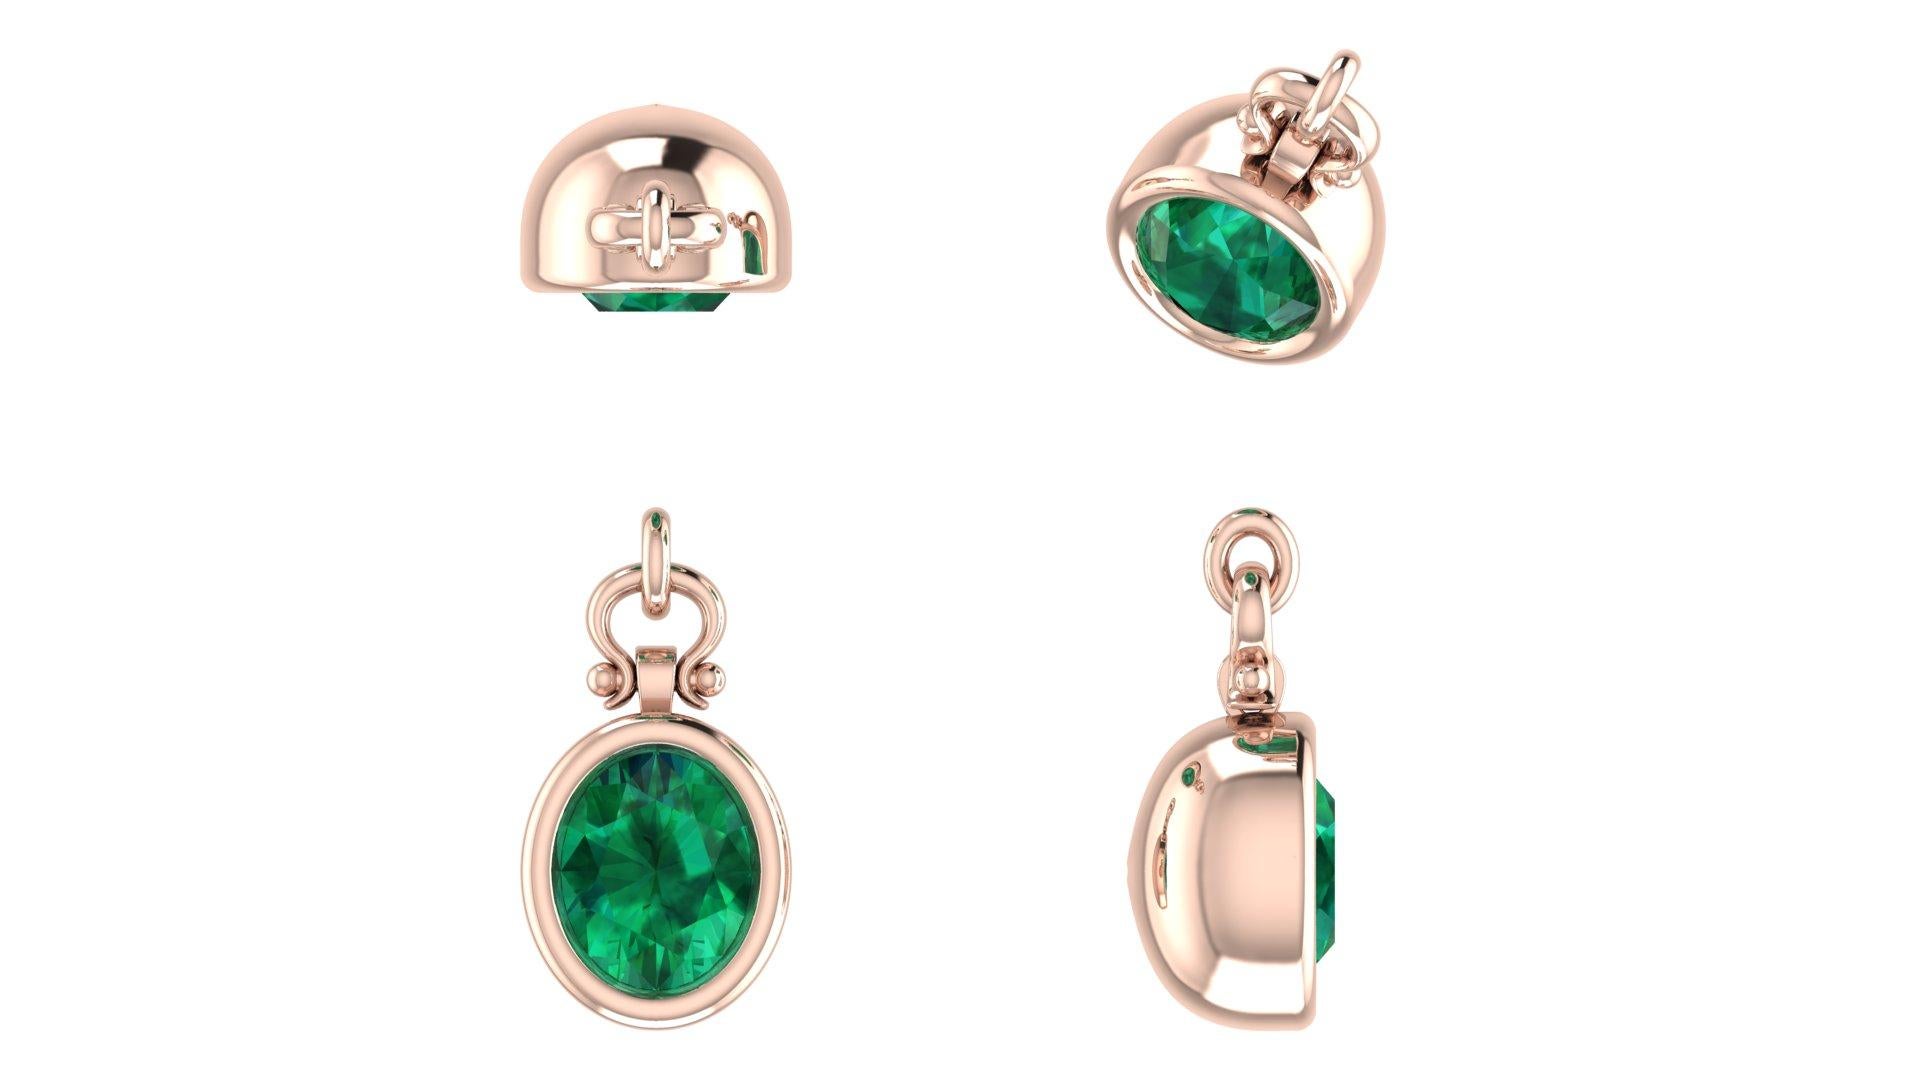 Contemporary 2.15 Carat Oval Cut Emerald Pendant Necklace in 18K For Sale